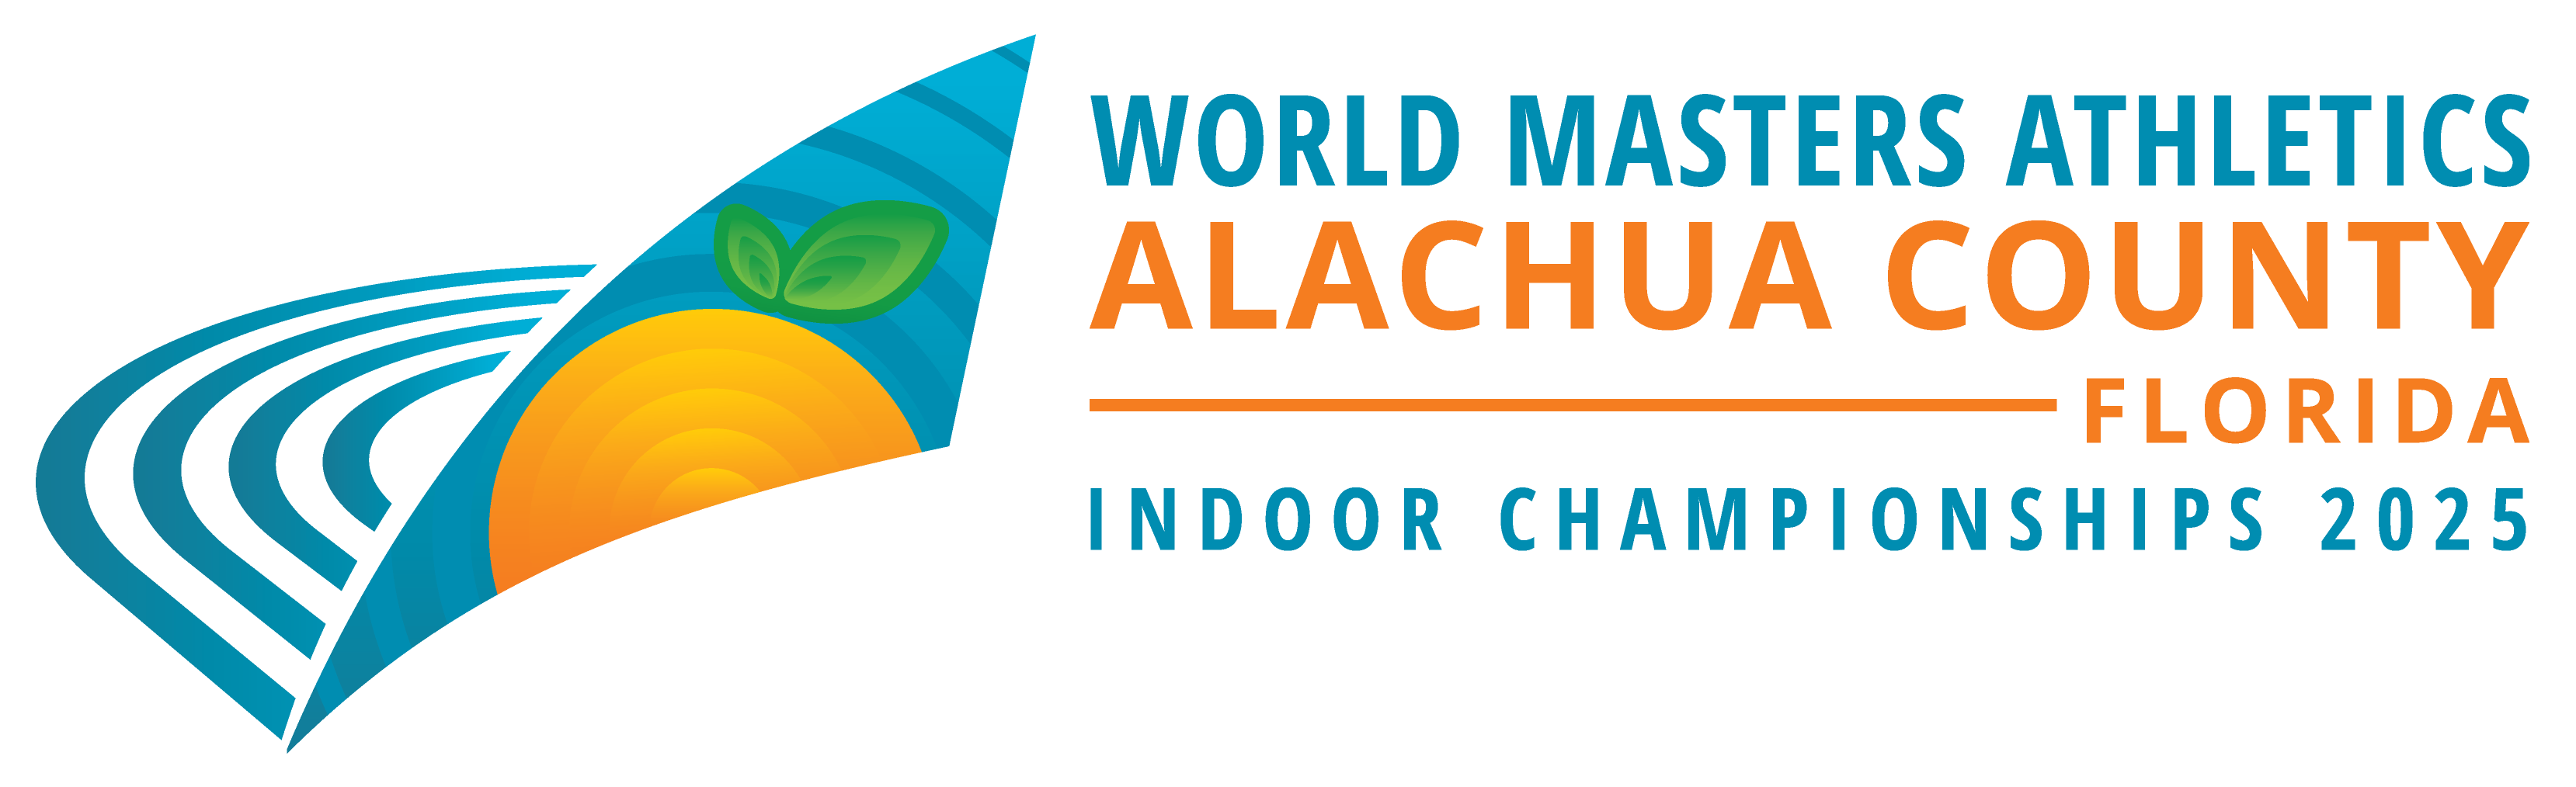 2025 World Masters Athletics Indoor Championships post thumbnail image